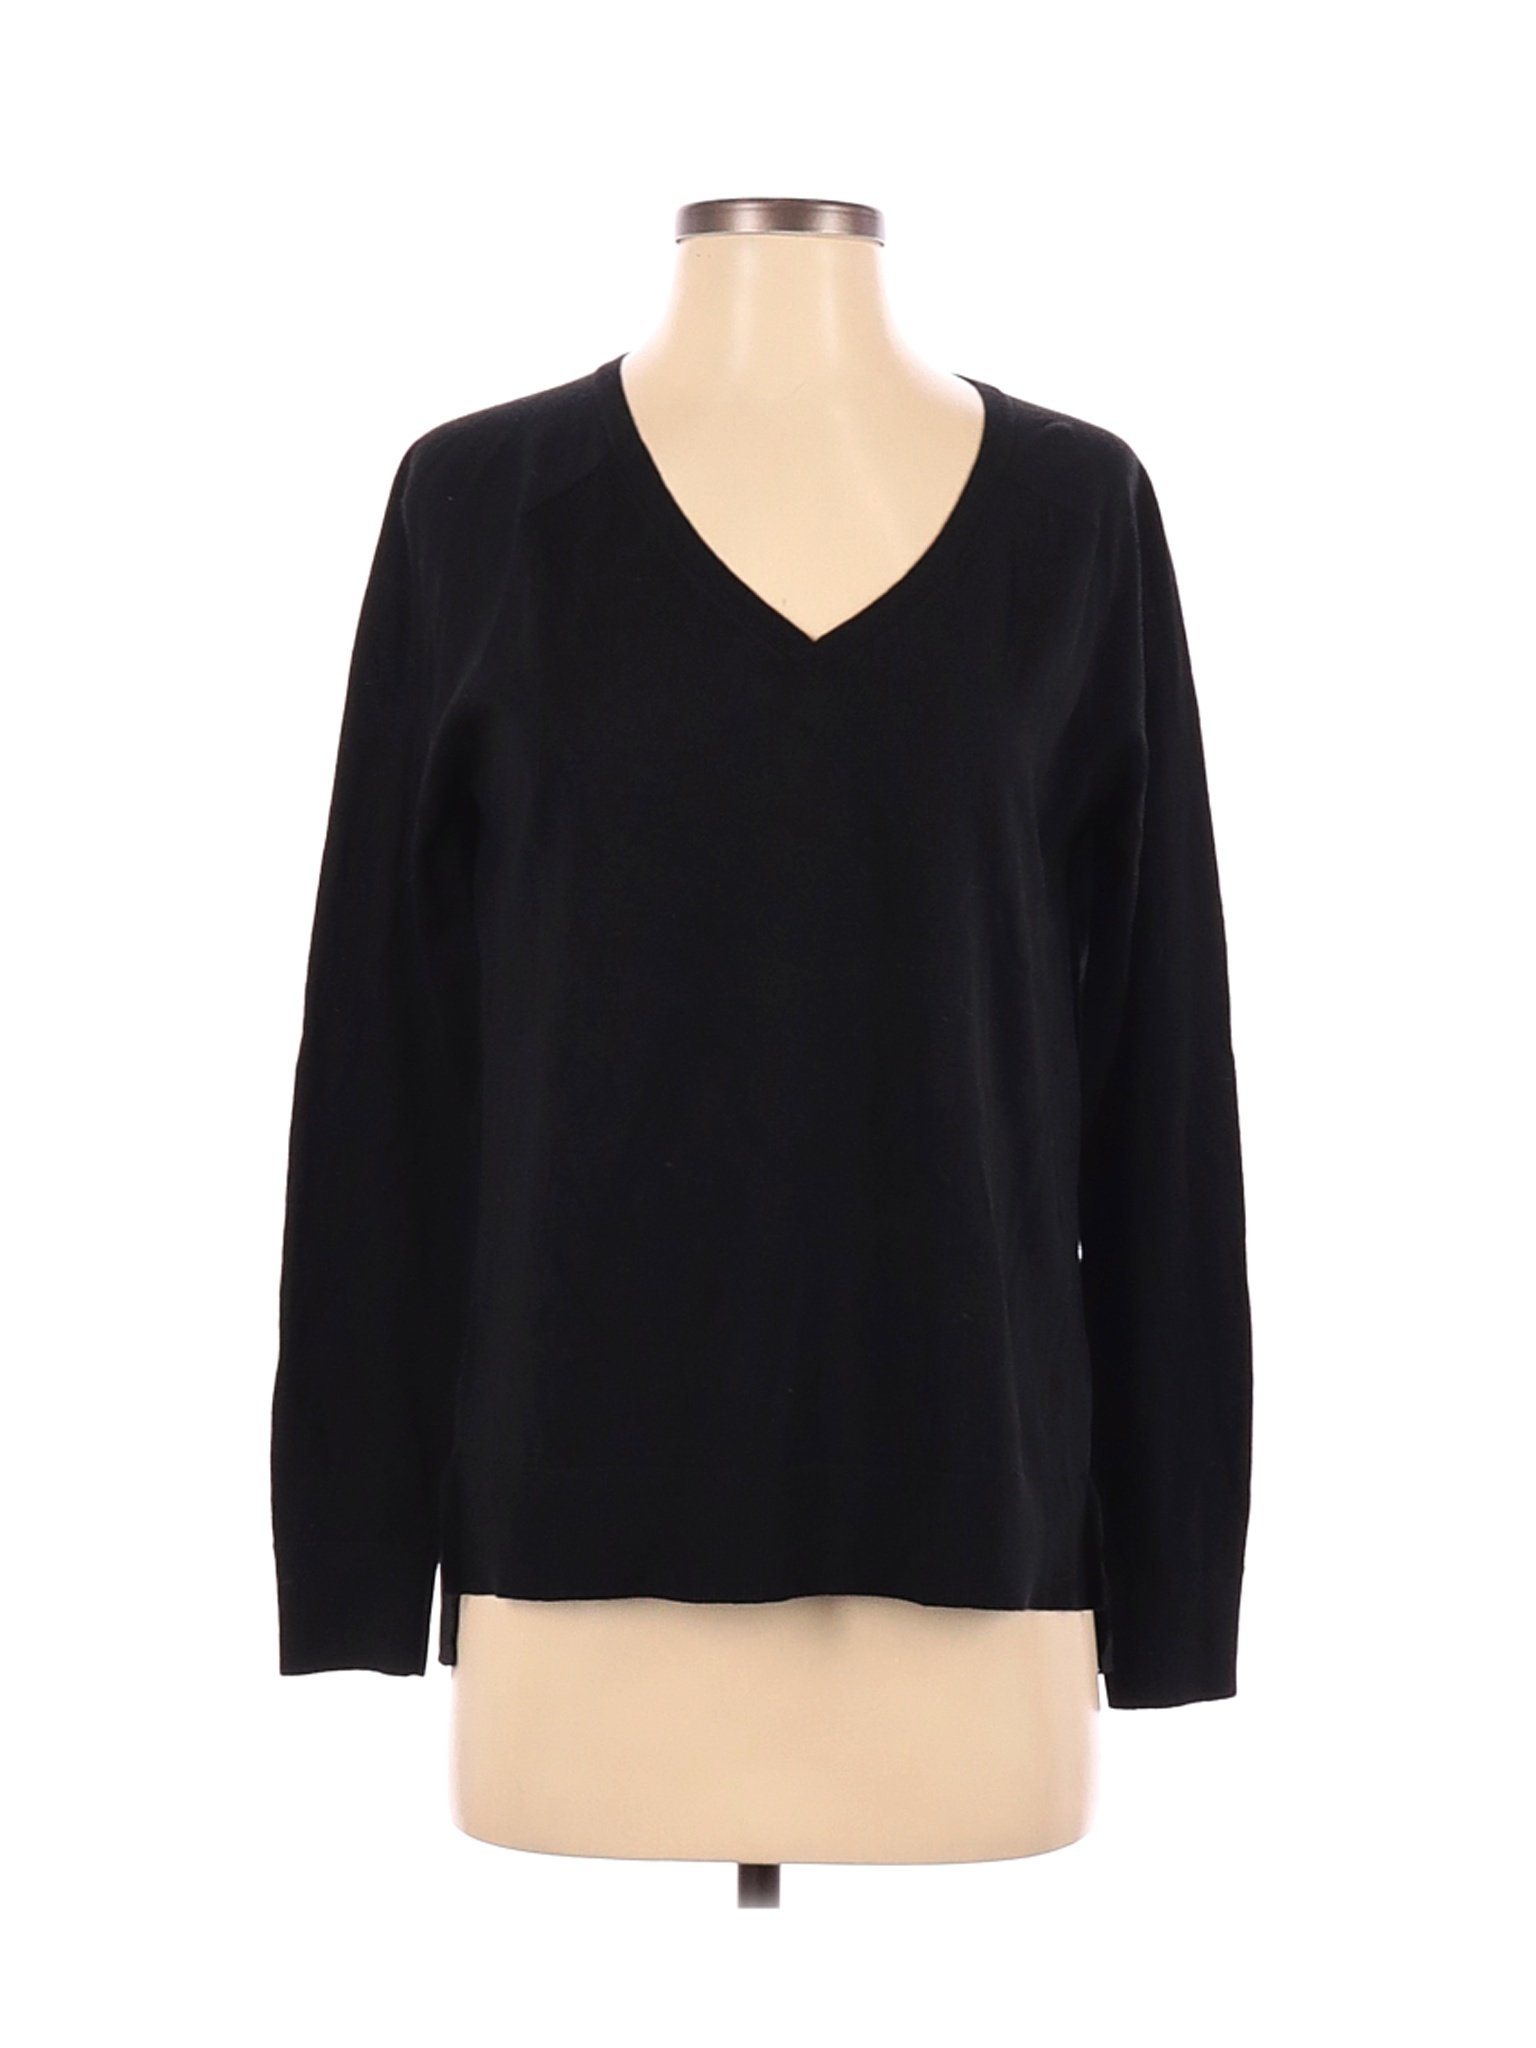 Ann Taylor LOFT 100% Cotton Solid Black Pullover Sweater Size M - 80% ...